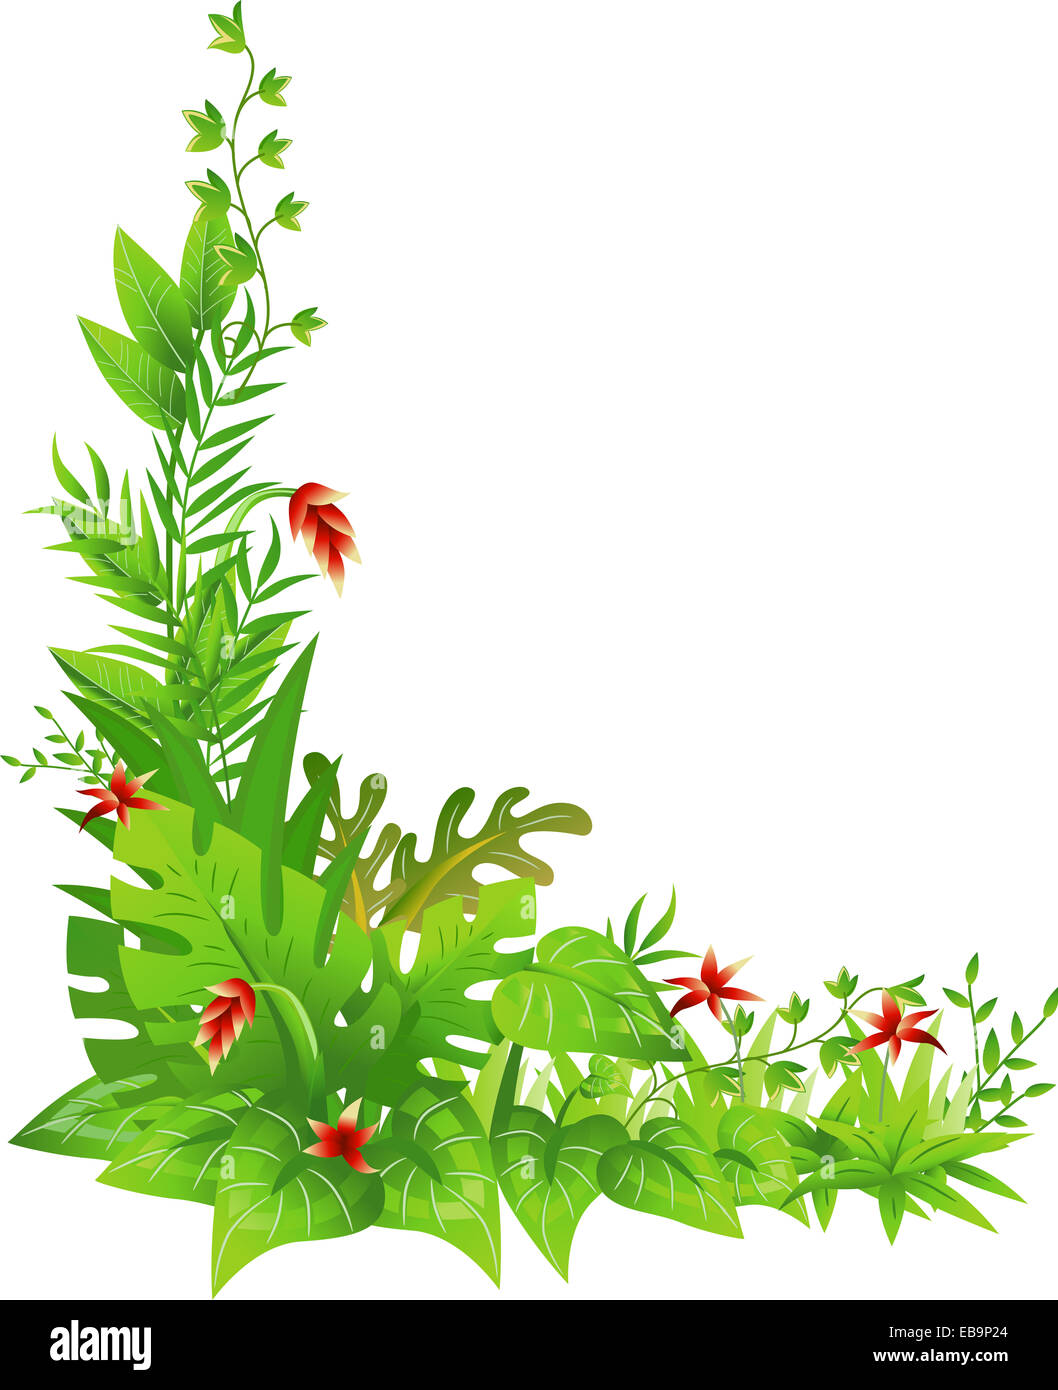 Corner Border Illustration Featuring Jungle Plants Stock Photo